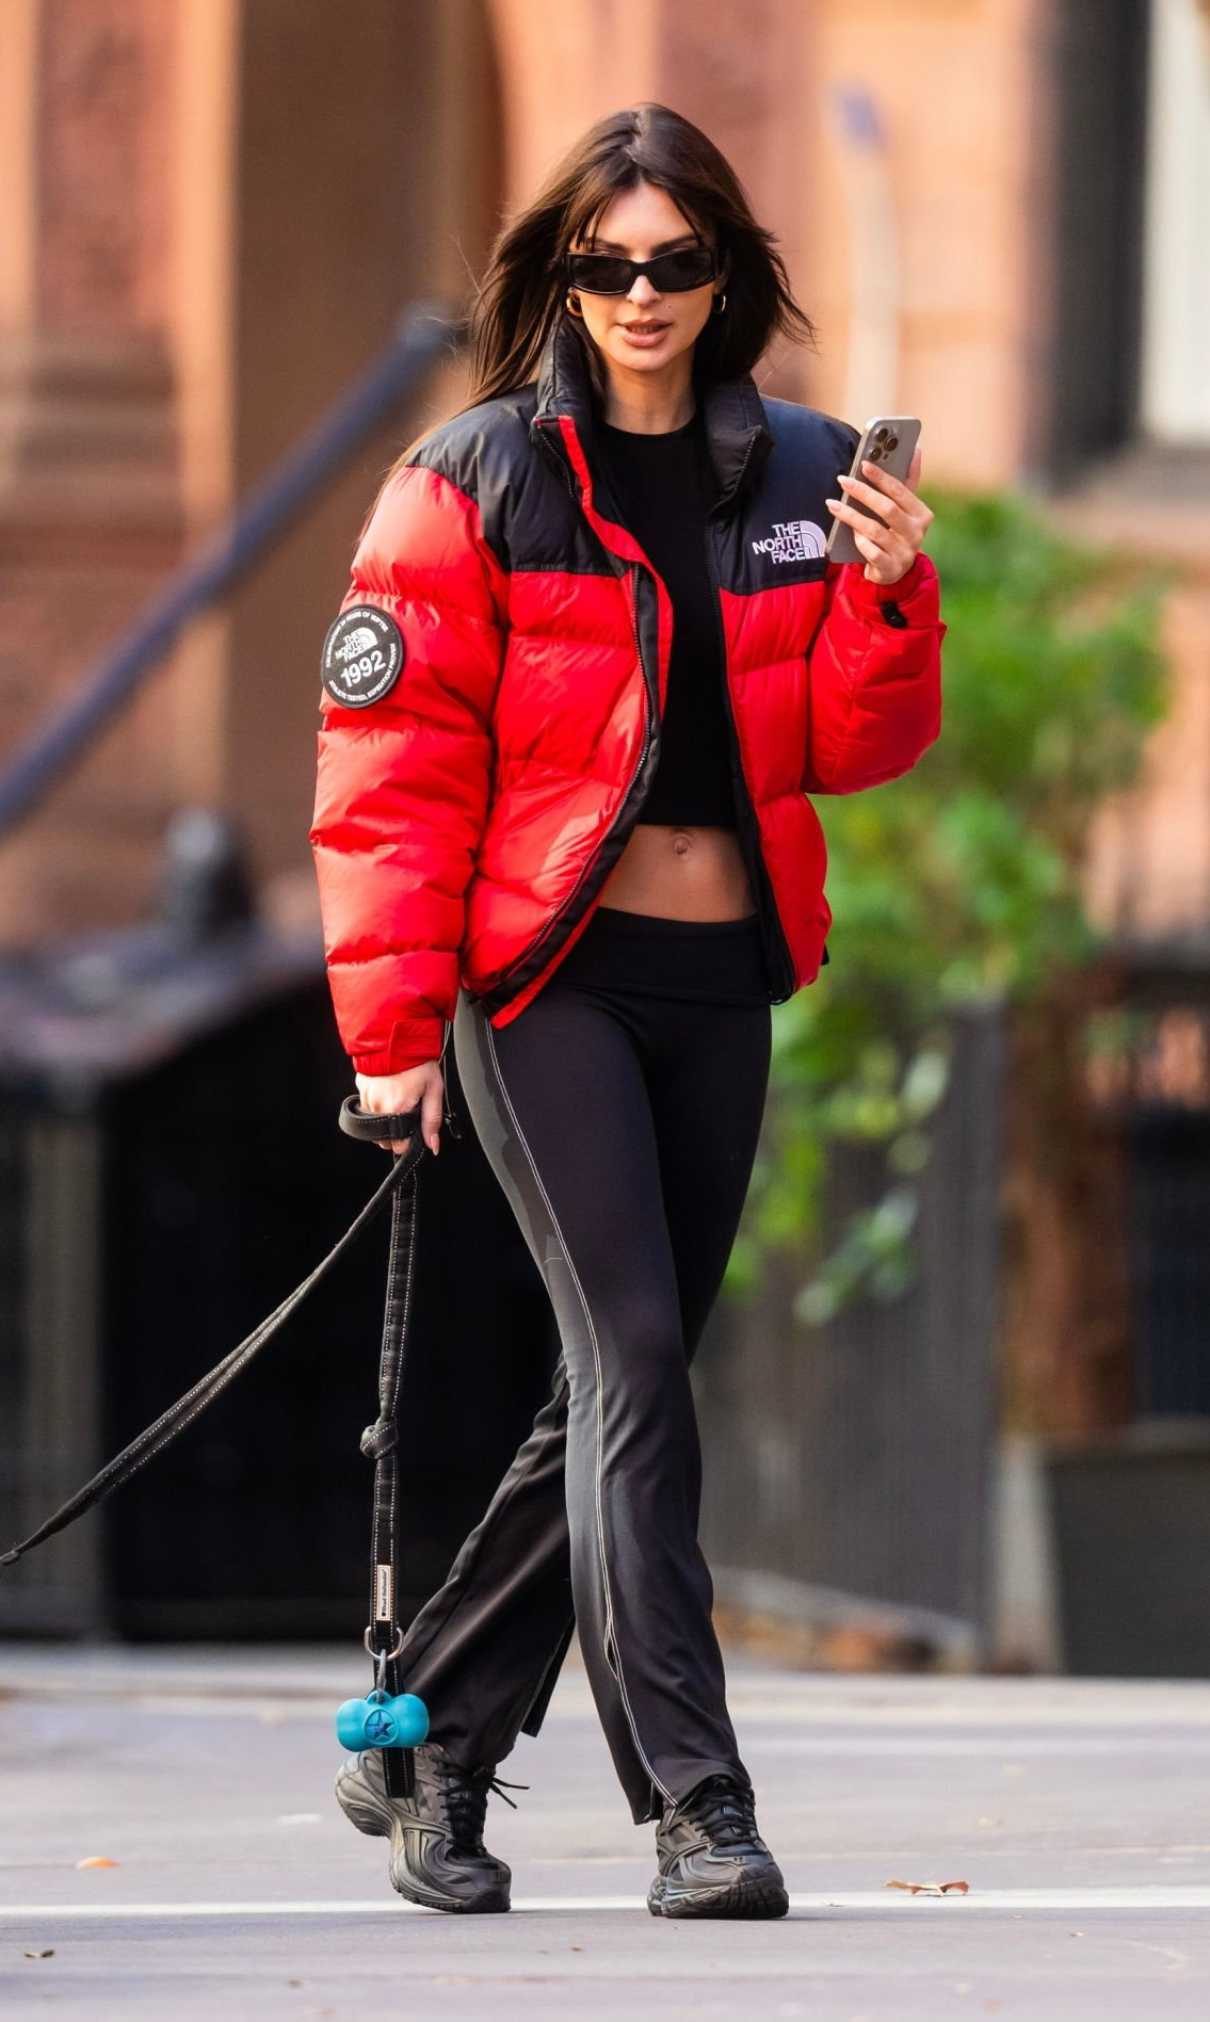 Emily Ratajkowski in a Red Jacket